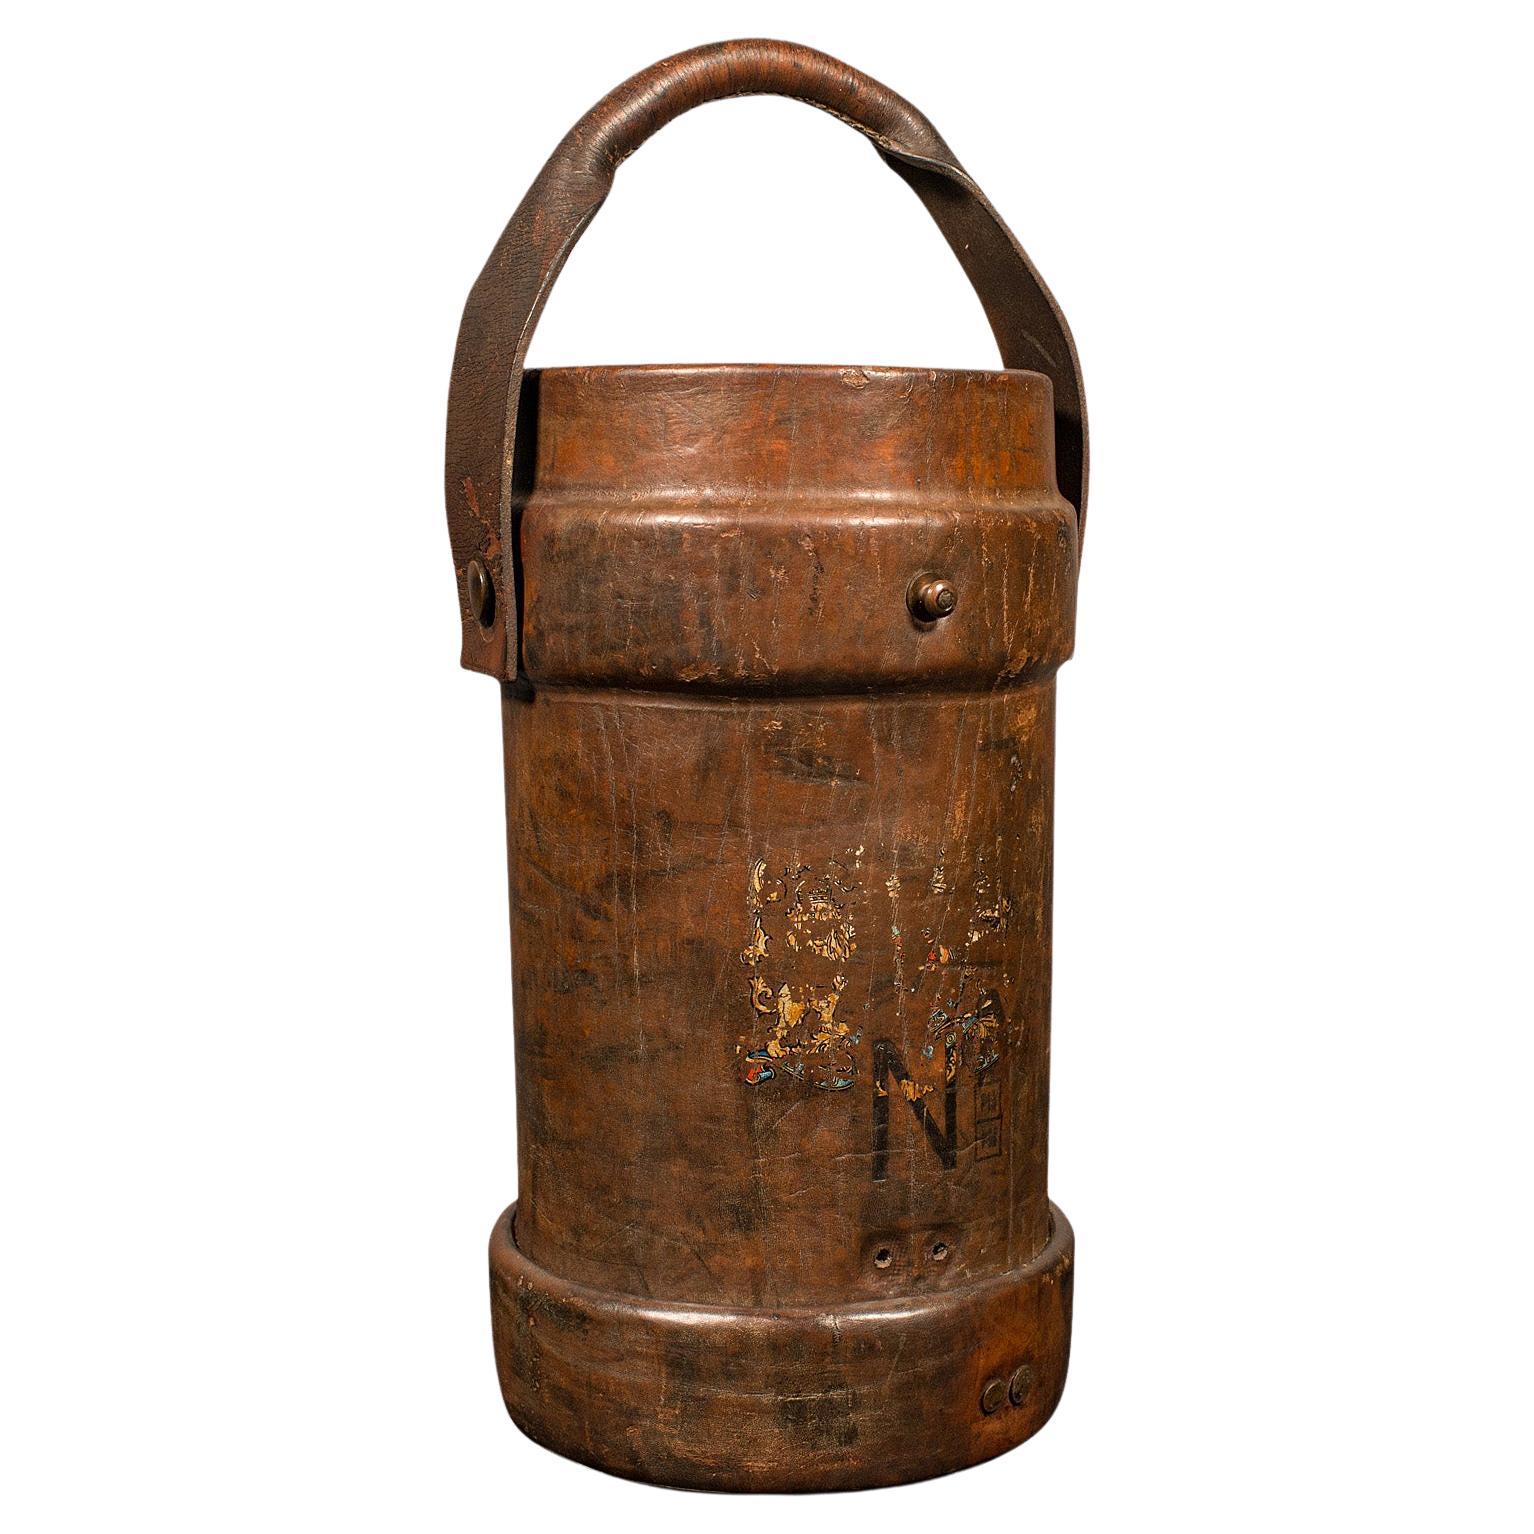 Vintage Decorative Stick Stand, English Leather Basket, Storage Bin, Mid-Century For Sale